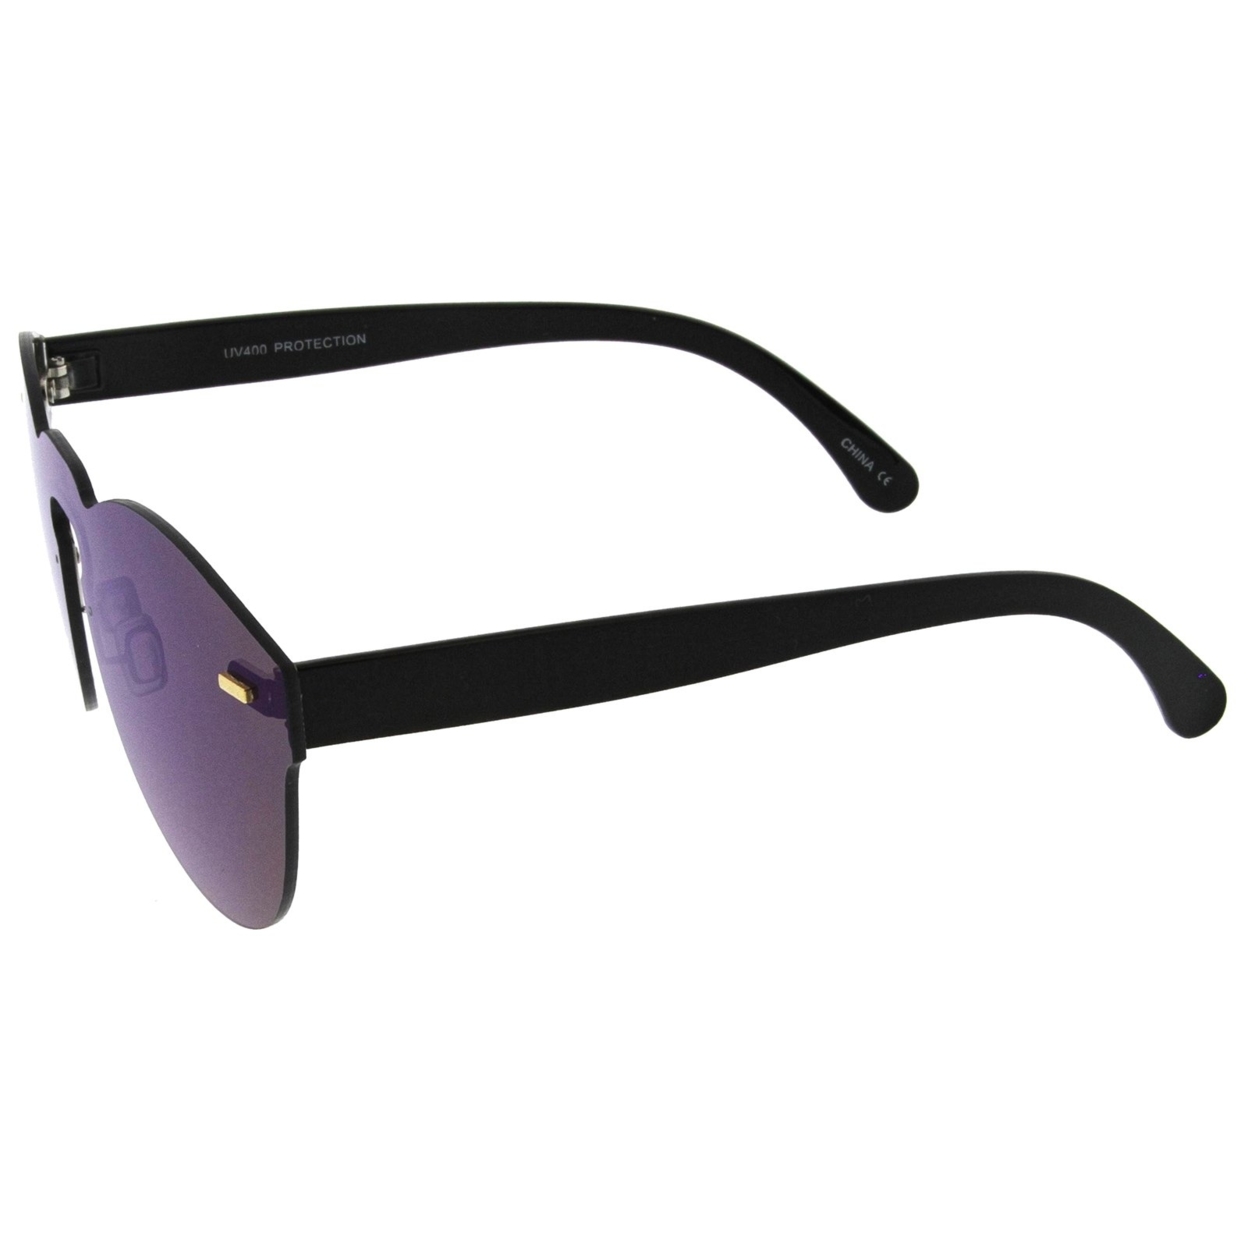 Futuristic Rimless Mono Flat Lens Horn Rimmed Shield Sunglasses 73mm - Black / Orange Mirror